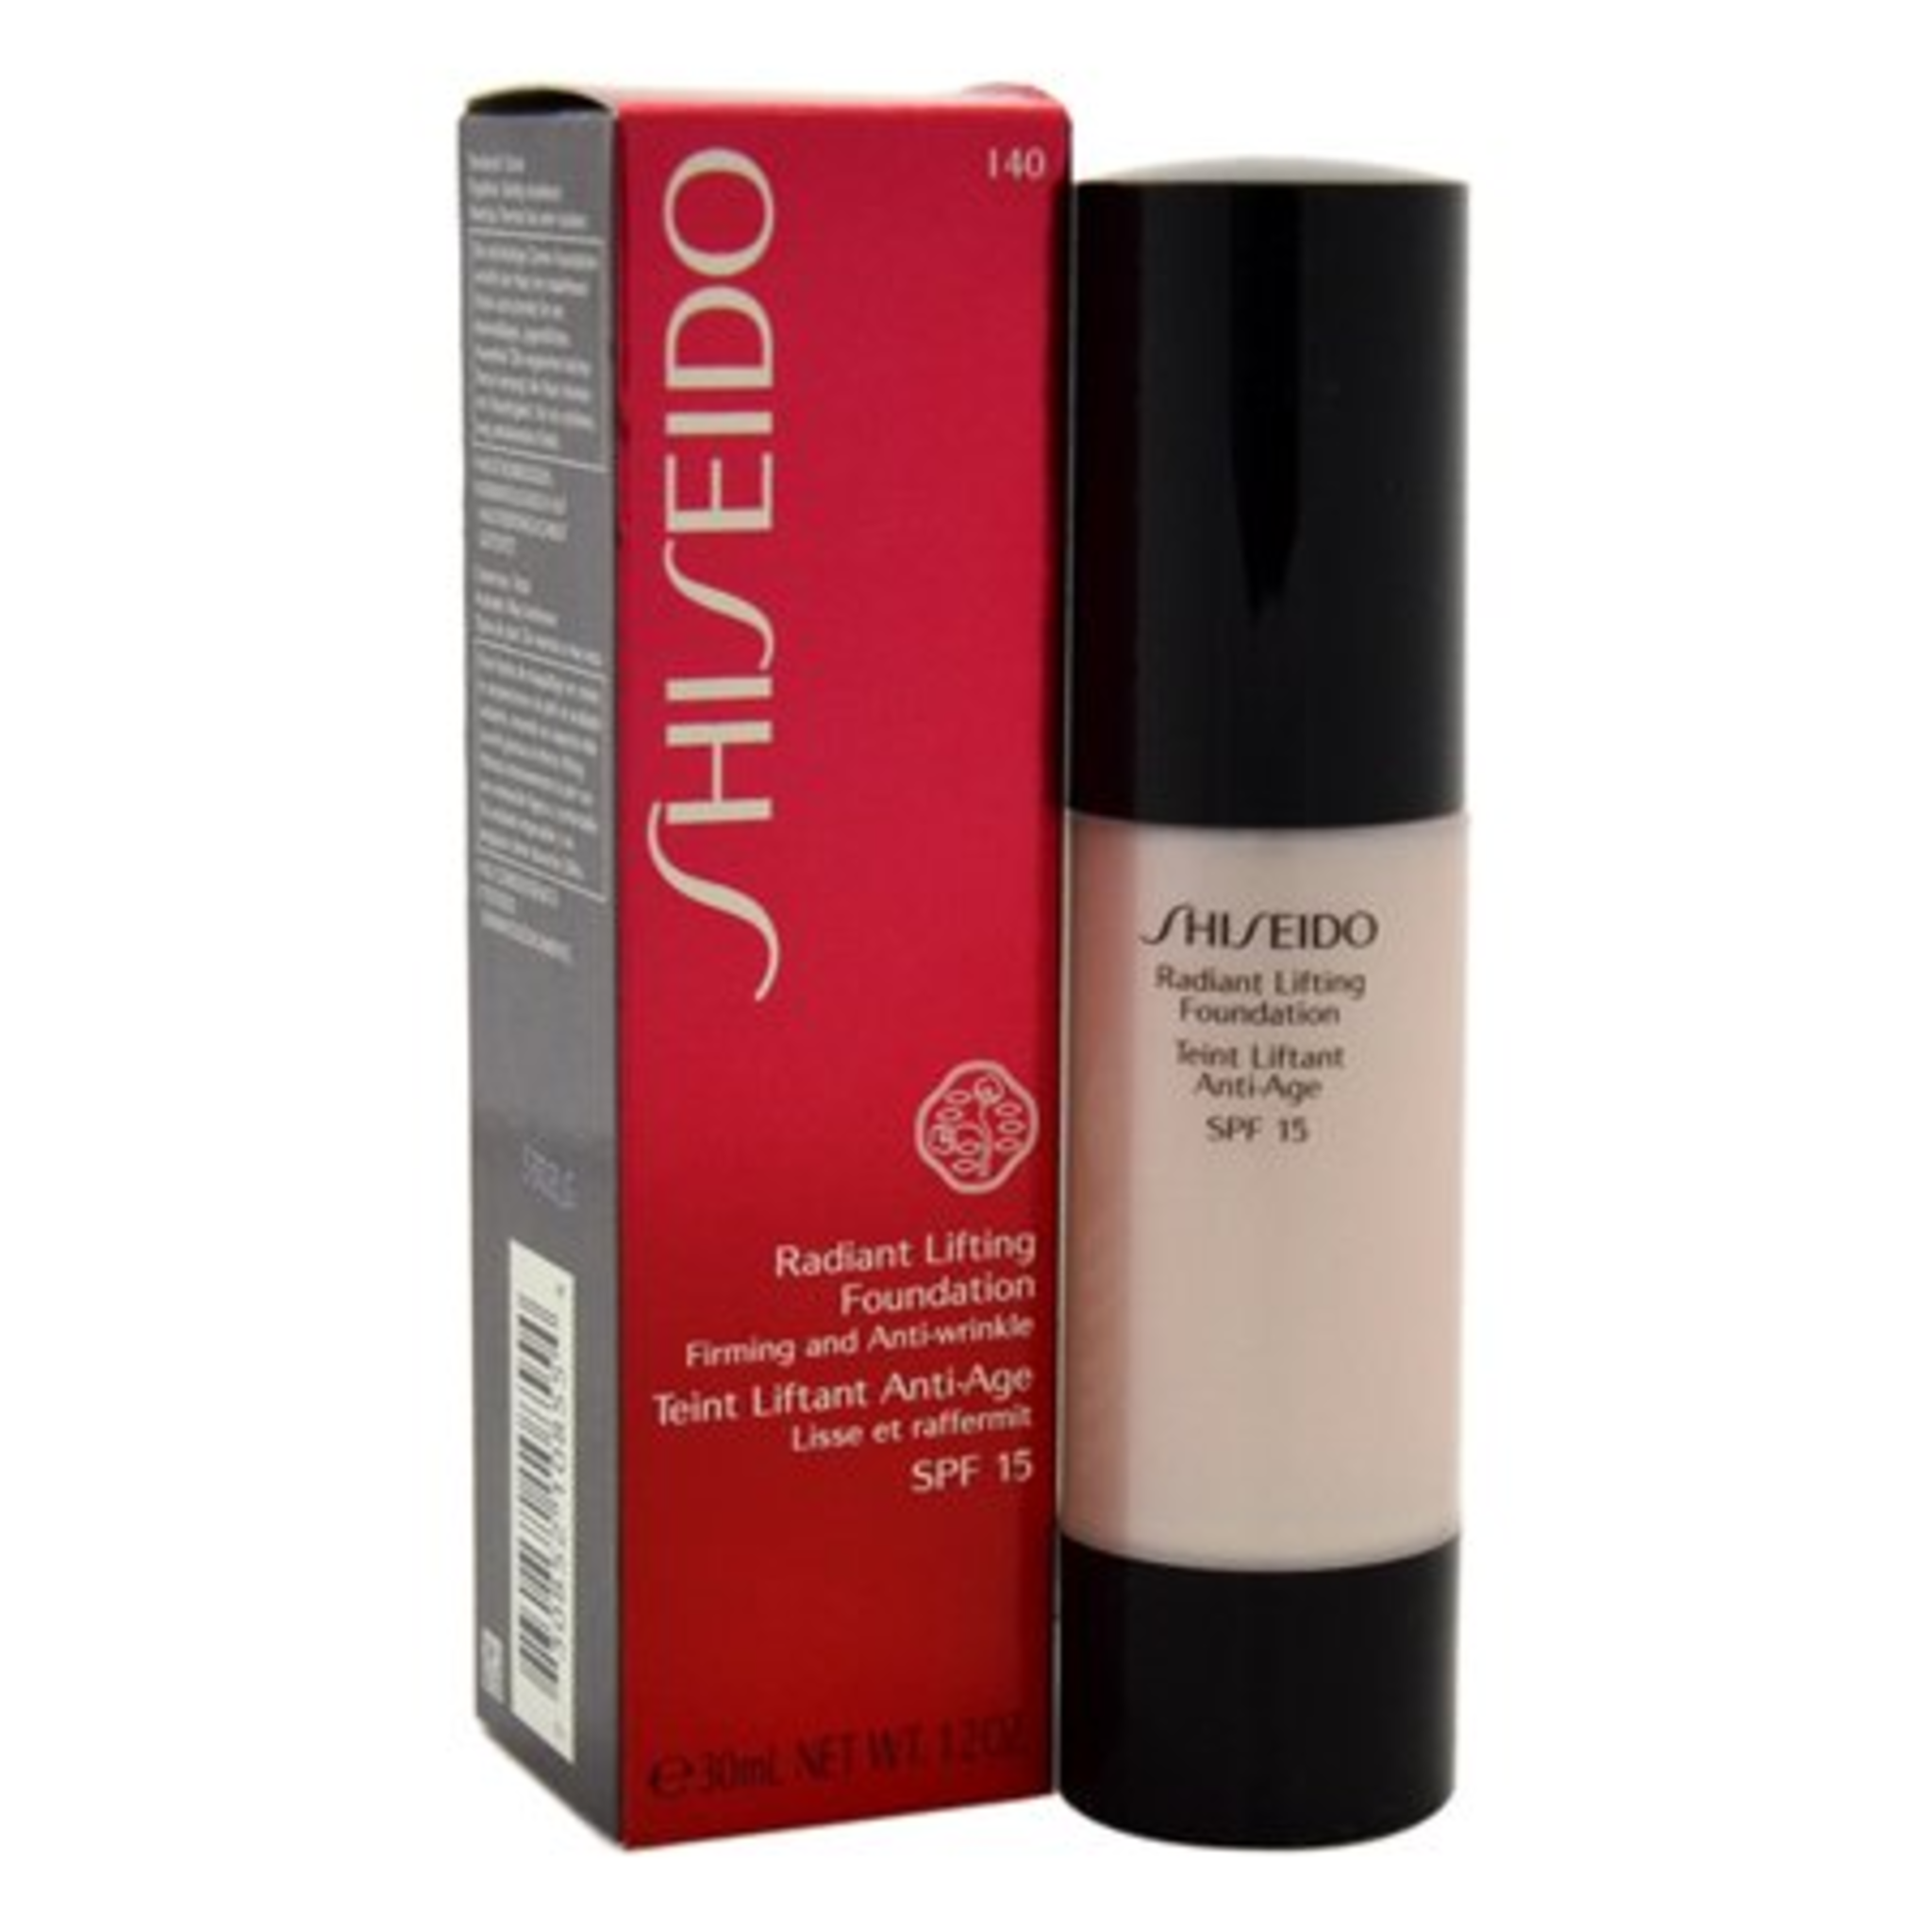 Shiseido тон. Shiseido - Radiant Lifting Foundation i40 natural Fair. Тональный крем Shiseido Radiant. Шисейдо Радиант лифтинг. Шисейдо Радиант лифтинг тональный крем.